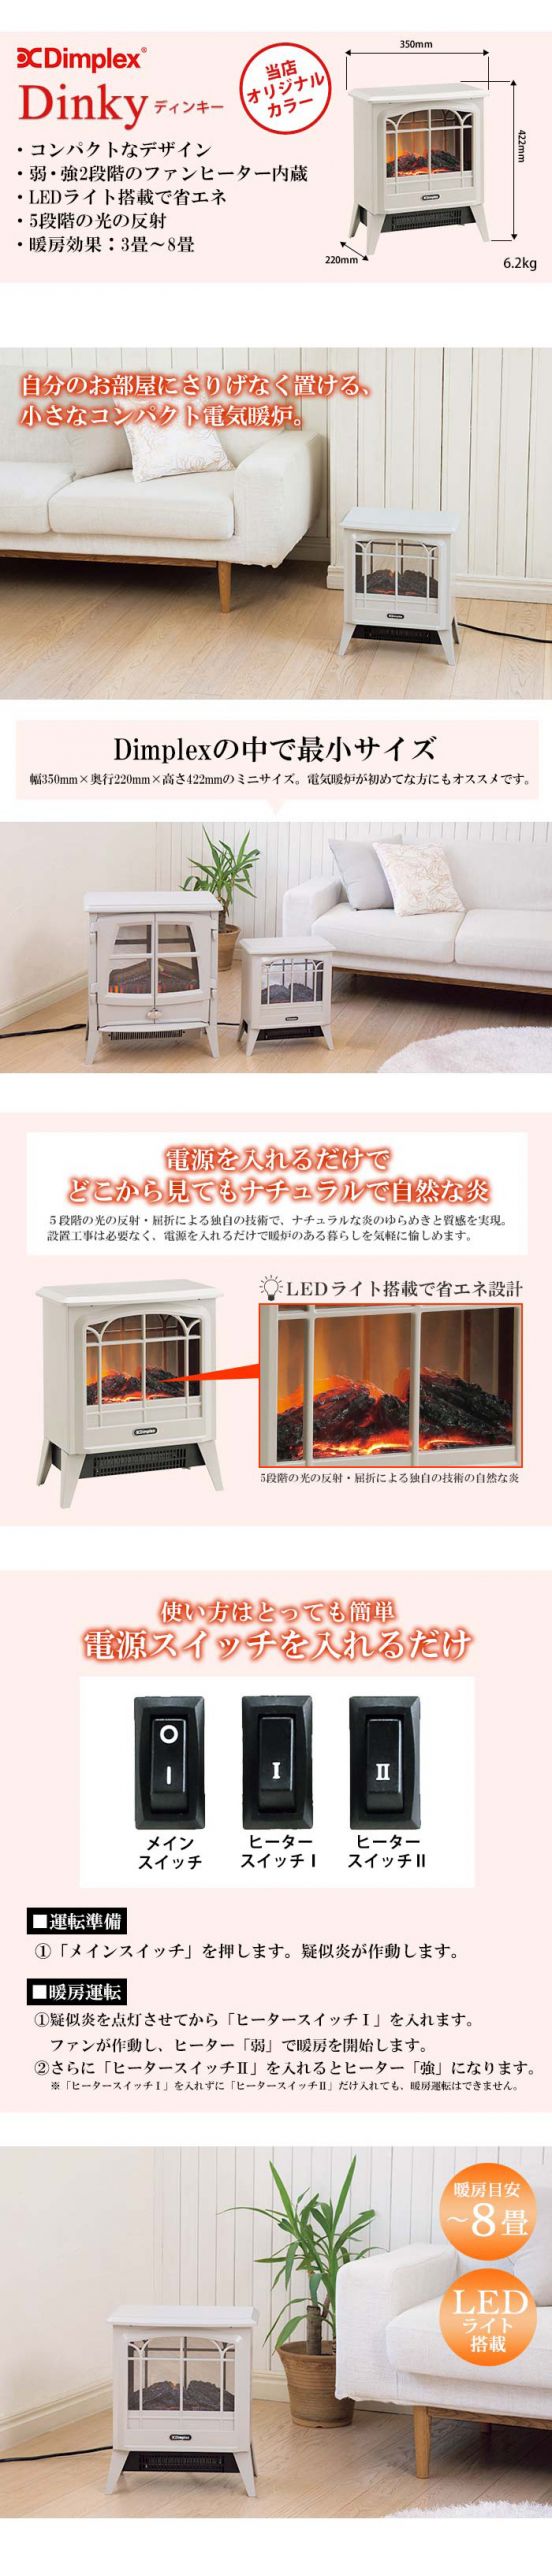 Fake Fireplaces Sale Inspirational ãã£ã³ãã¬ãã¯ã¹ Dimplex Electricity Fireplace Dinky Stove Dnk12pgj ãã£ã³ã­ã¼ ãº Pull Gray original Color Heating Heating Machine Energy Saving Stove